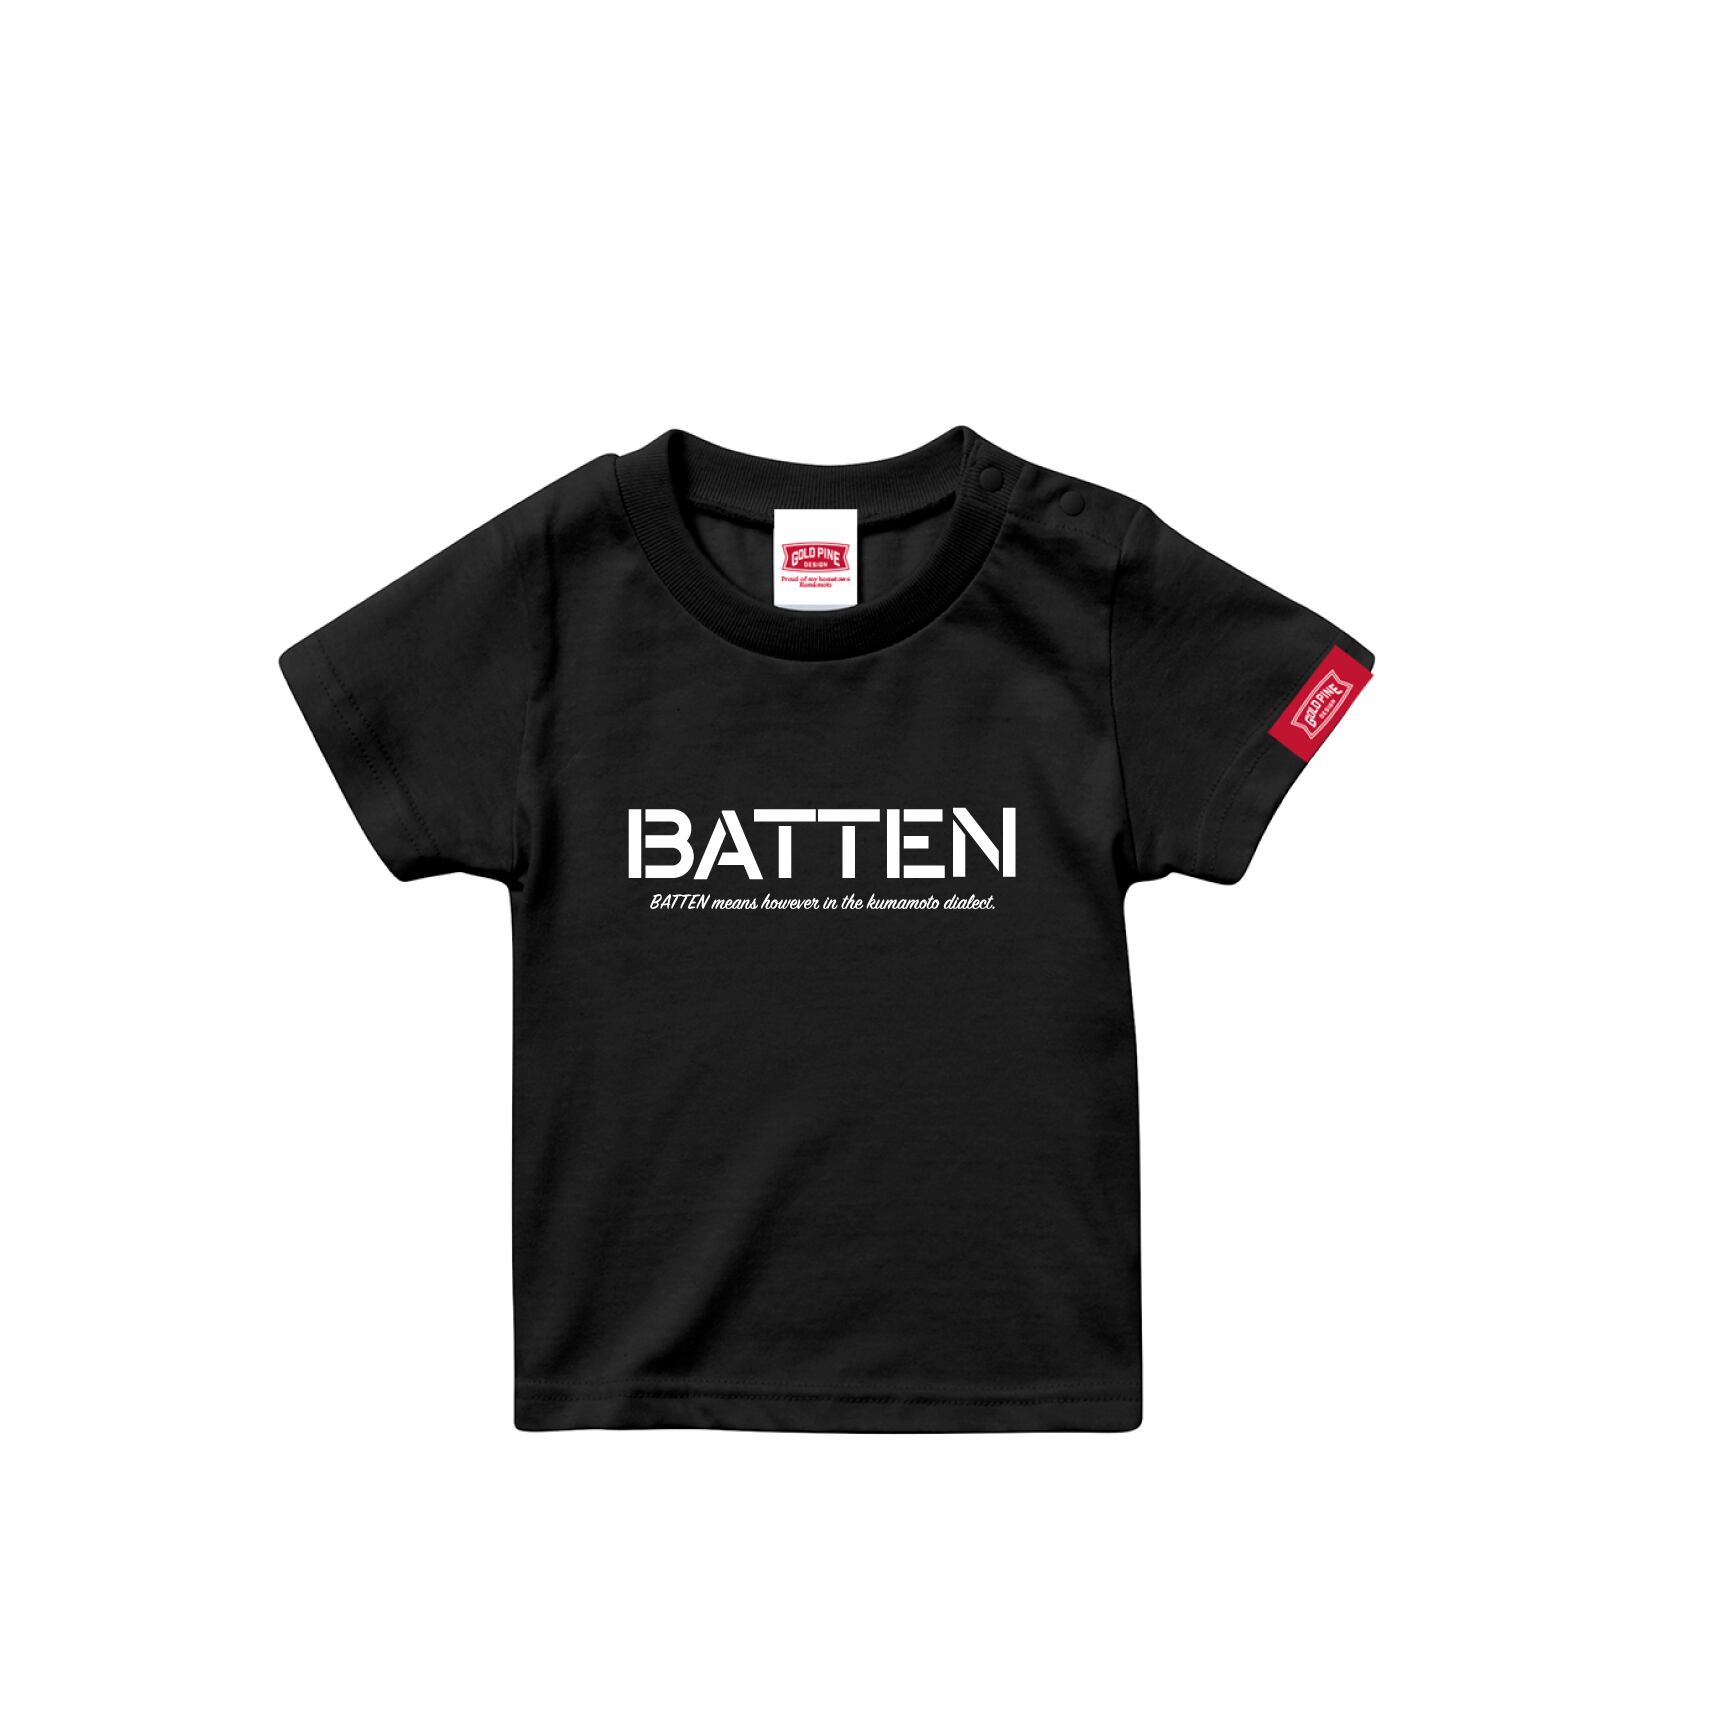 BATTEN-Tshirt【Kids】Black